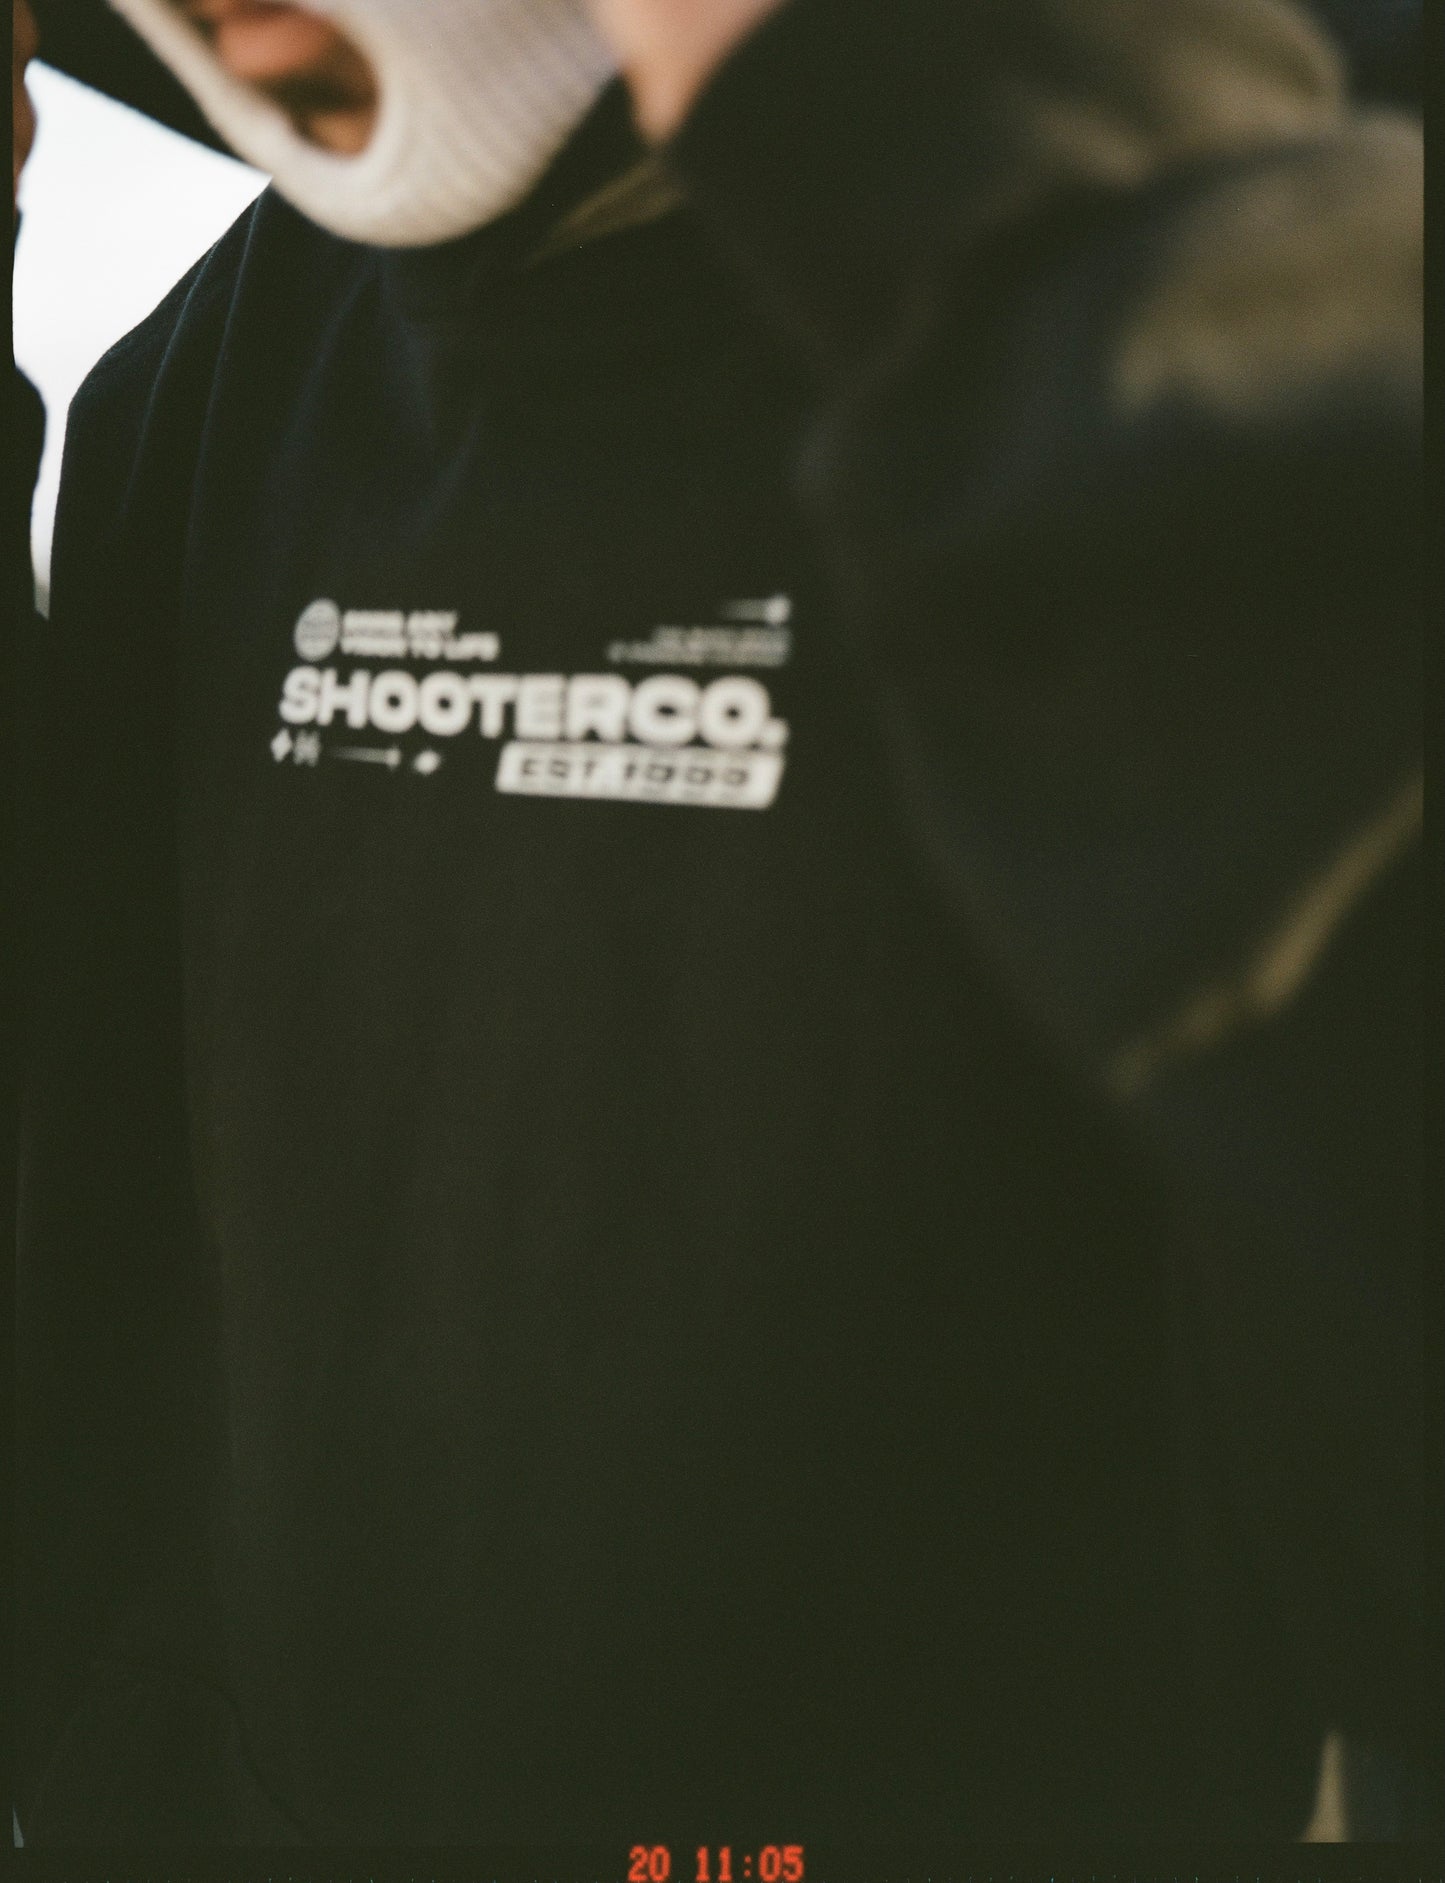 ShooterCO - T Shirt (WHITE & BLACK)